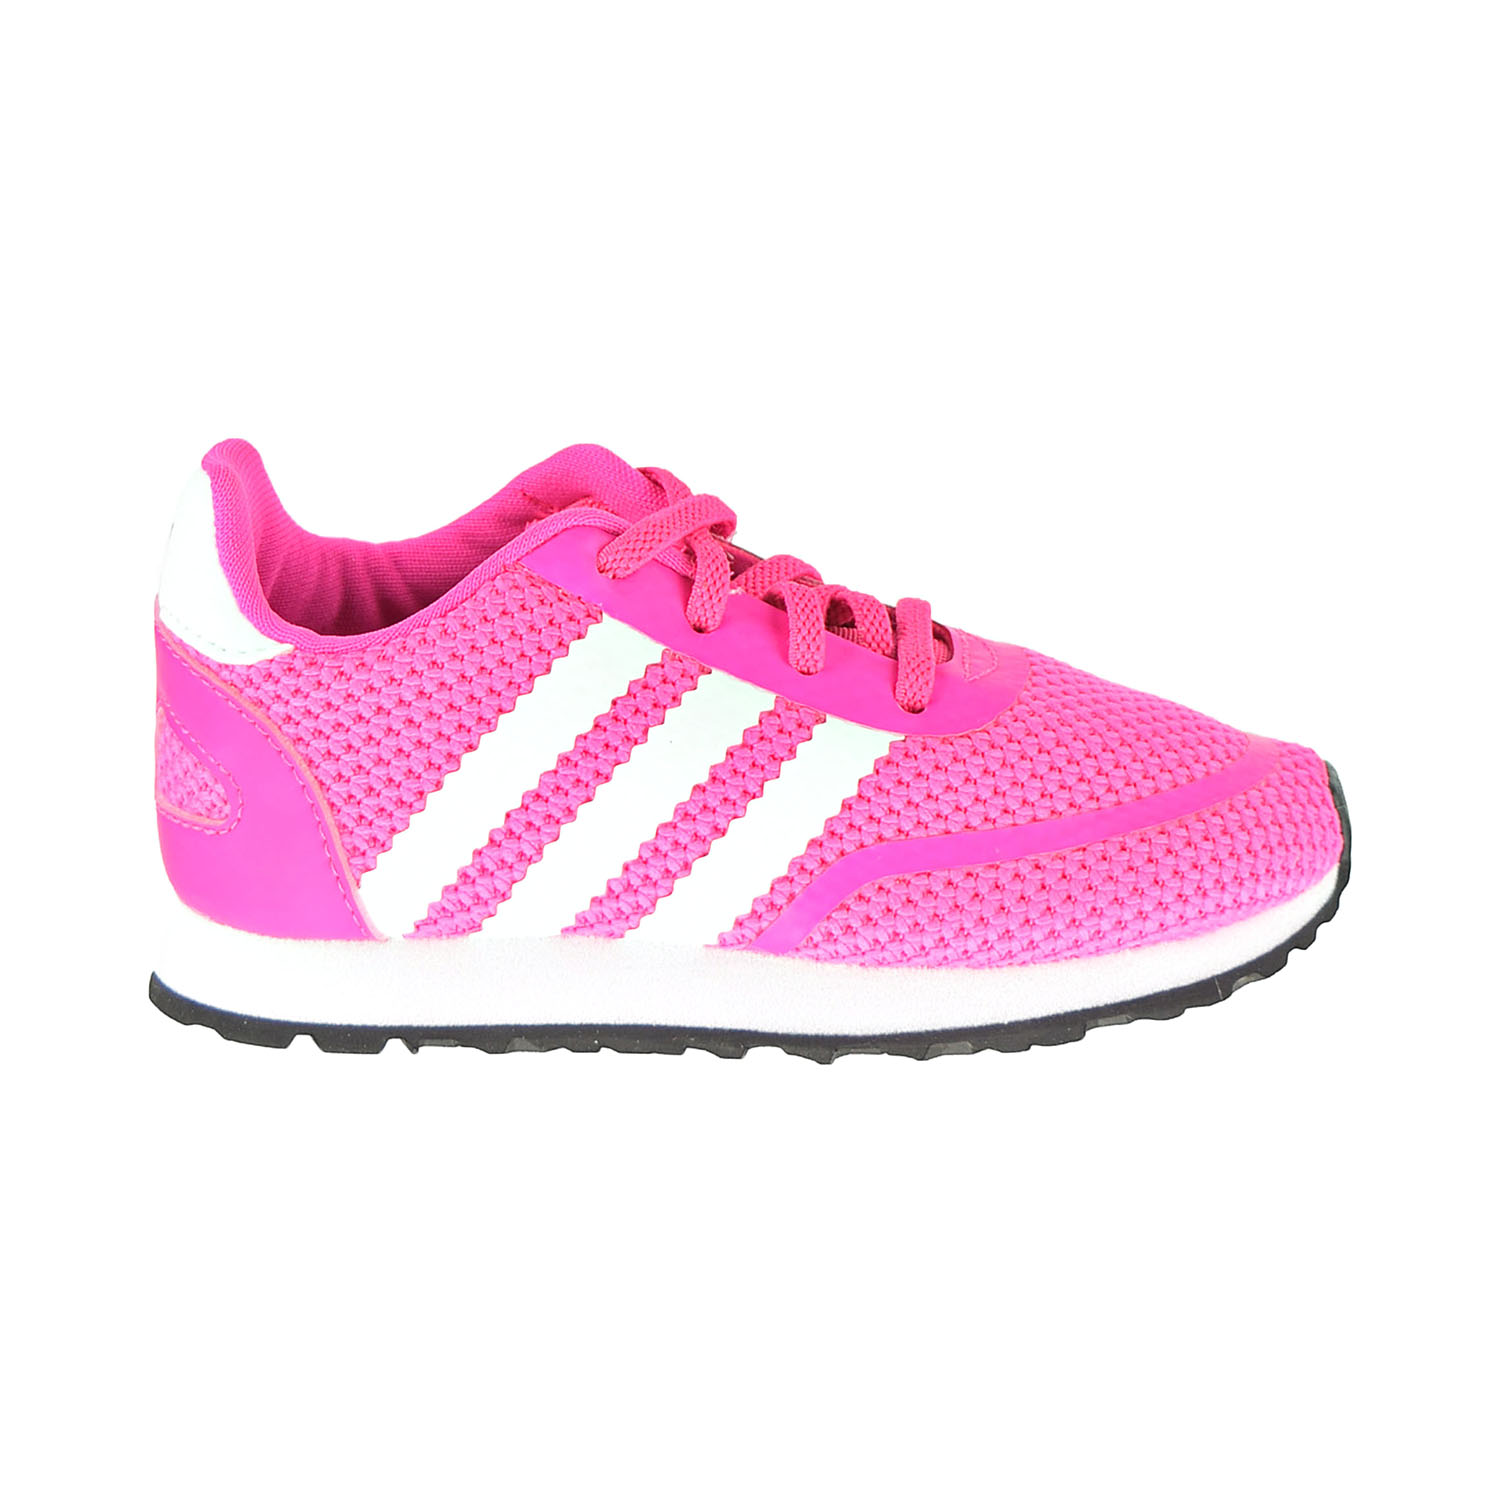 adidas n 5923 pink